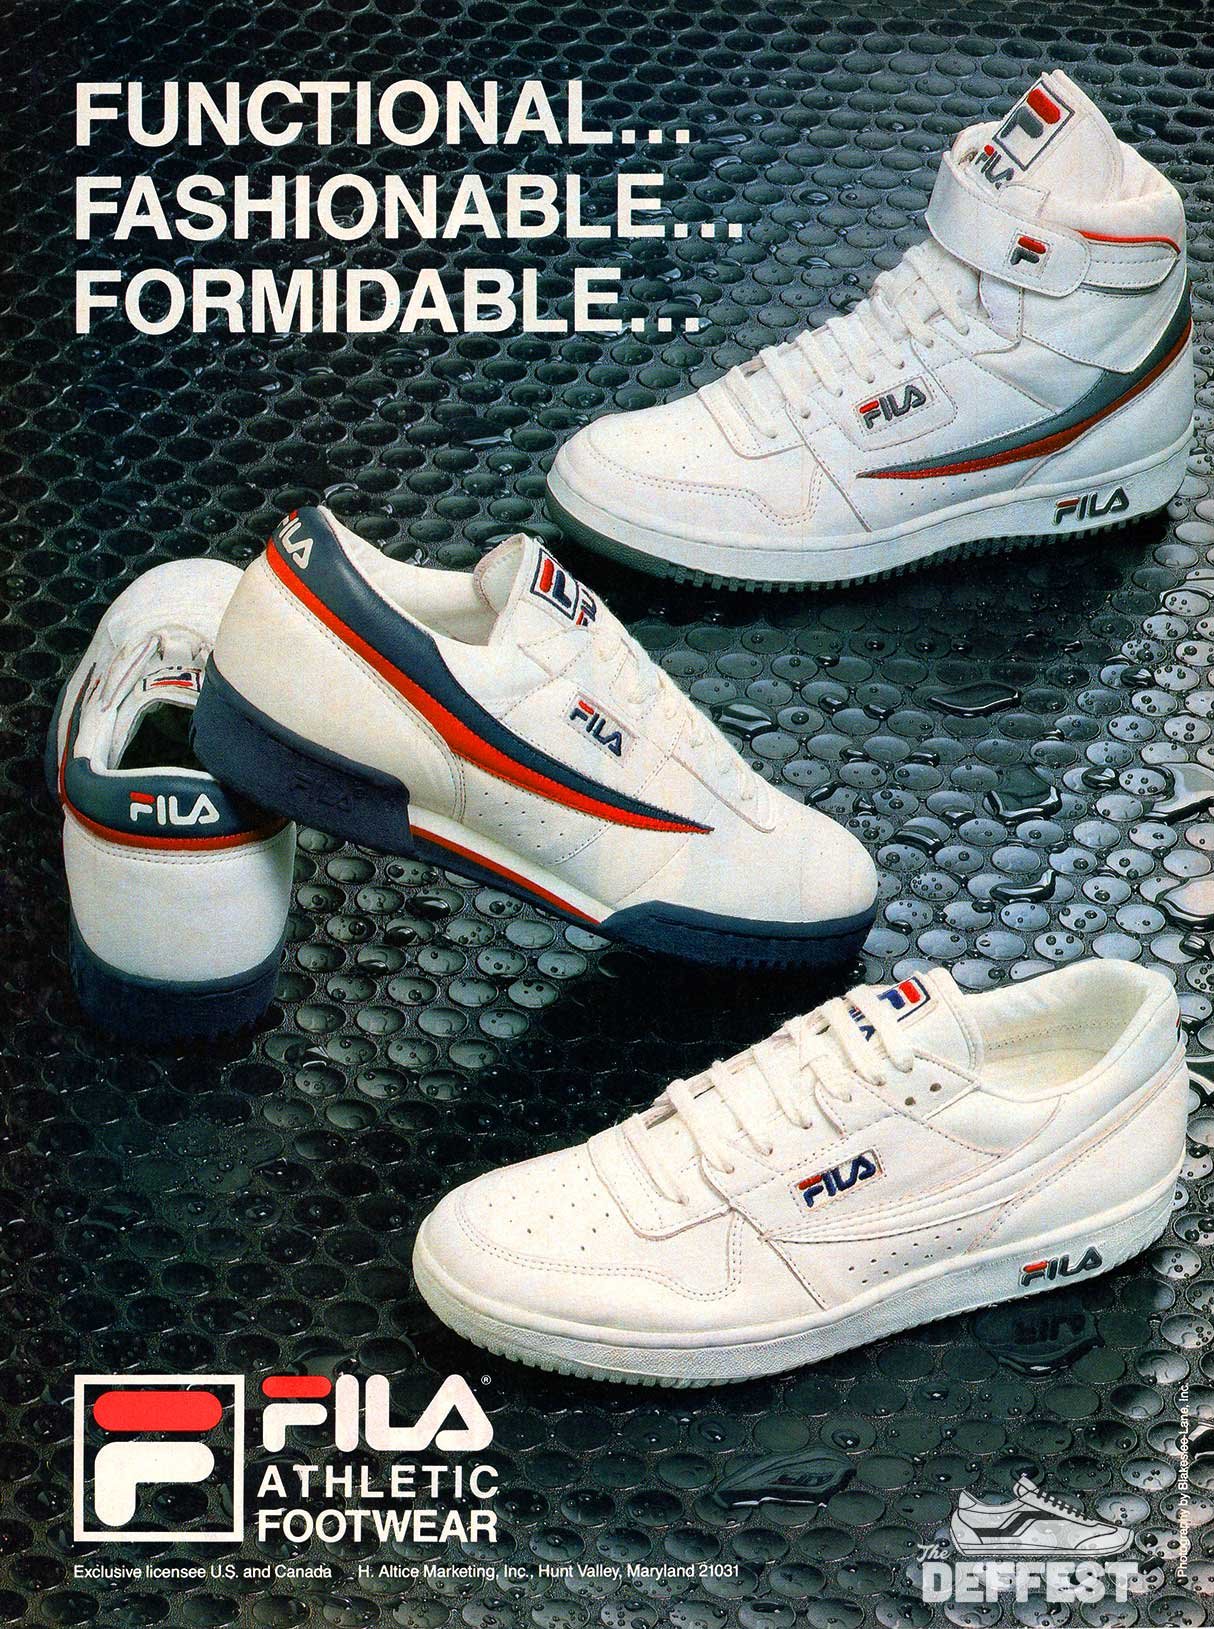 vintage Fila shoes — The Deffest®. vintage and retro sneaker blog. — Ads